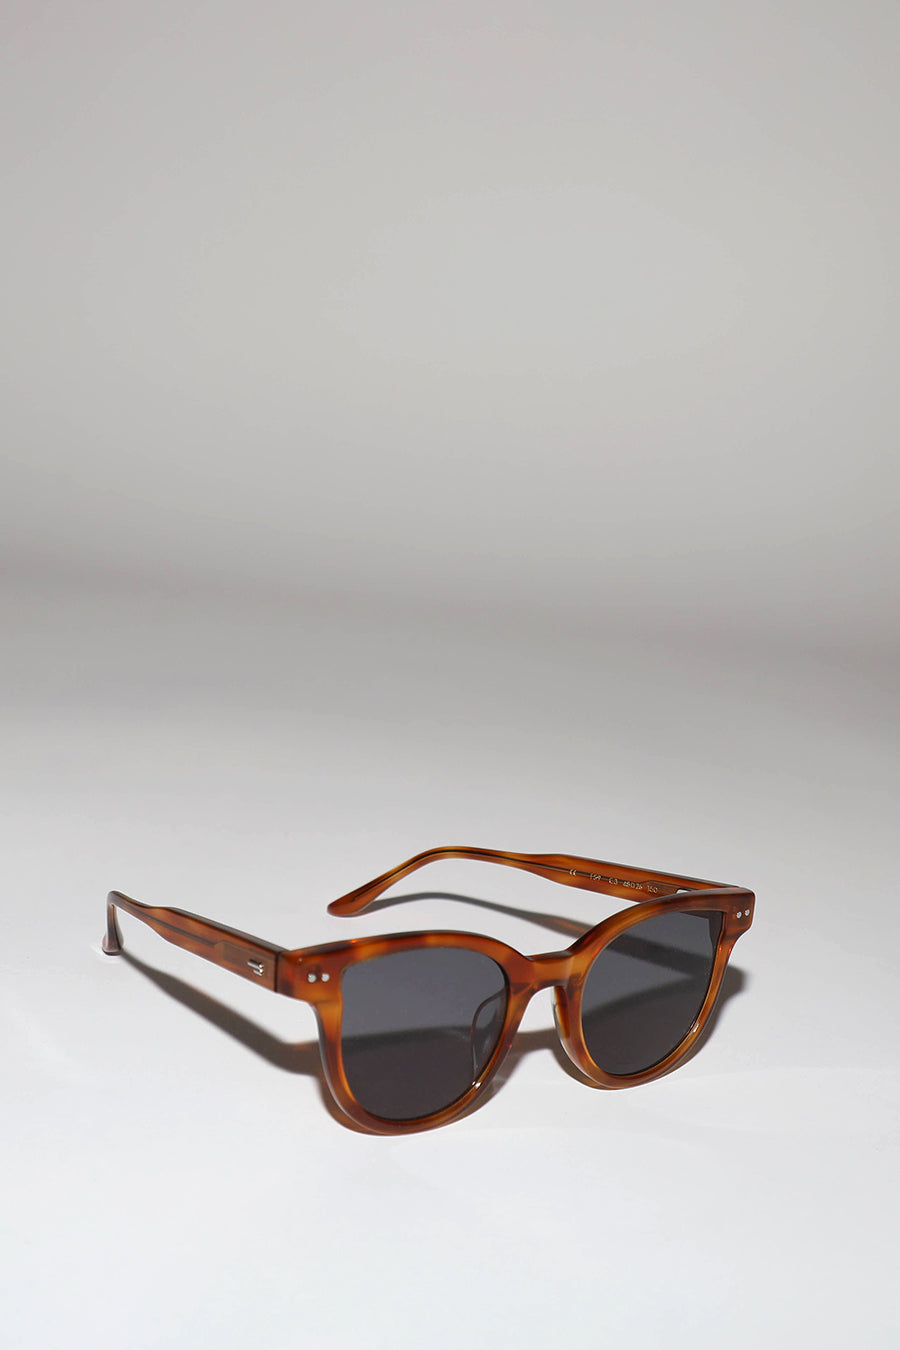 Projekt Produkt FS9 Sunglasses in Tortoise with Black